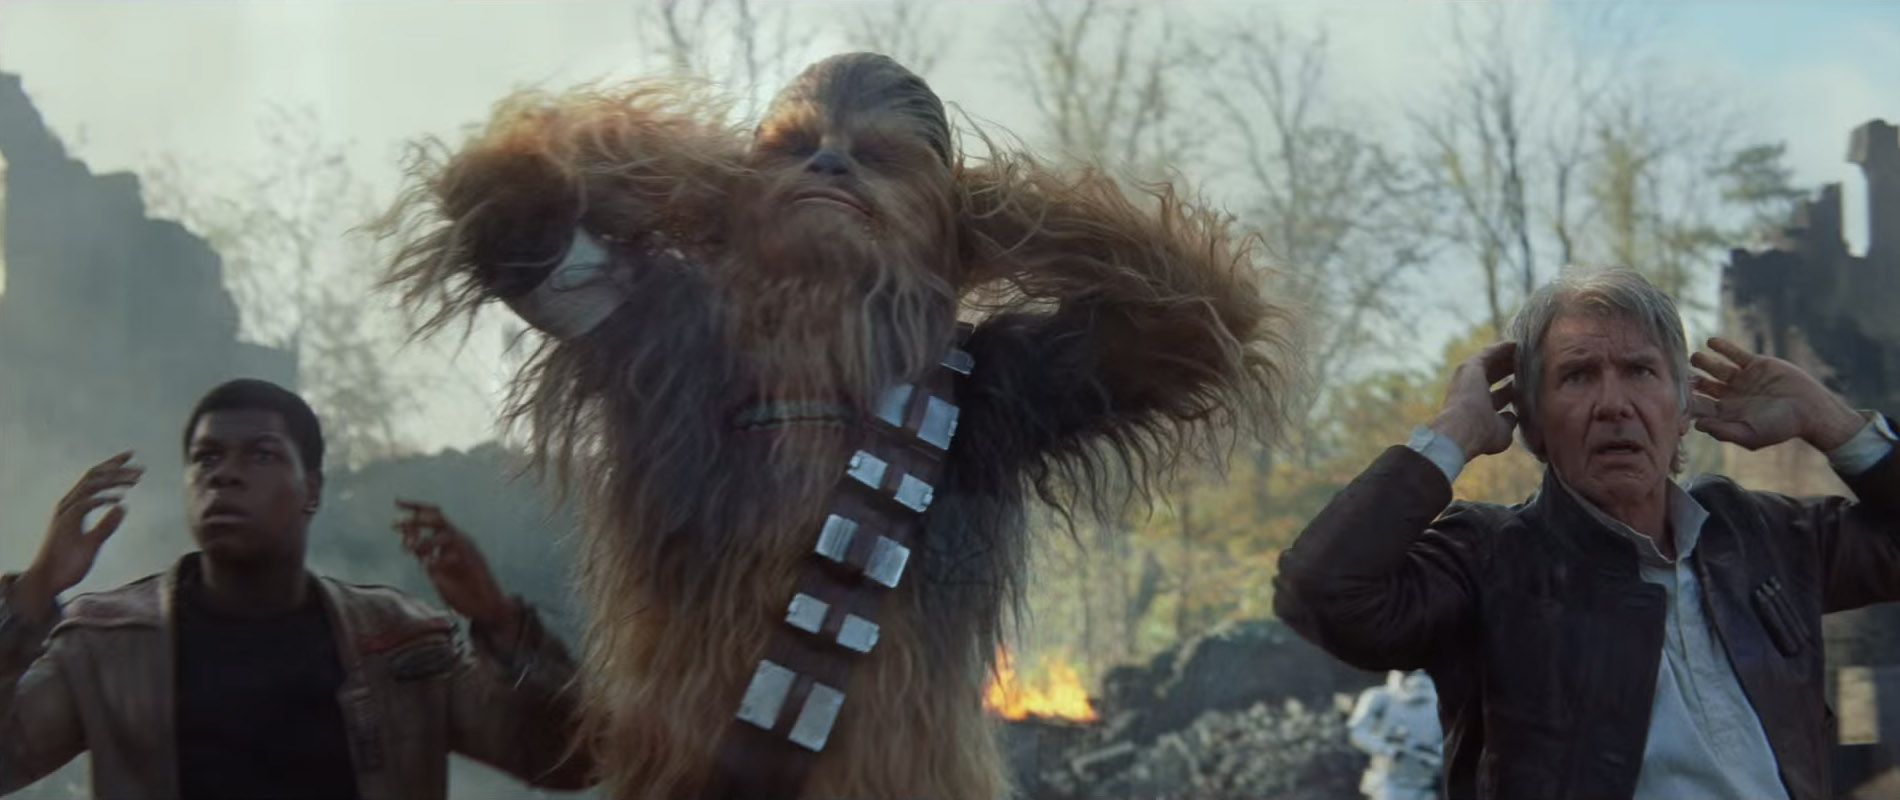 Star Wars 7 Trailer #3 - Halo Solo Finn Chewbacca Surrender